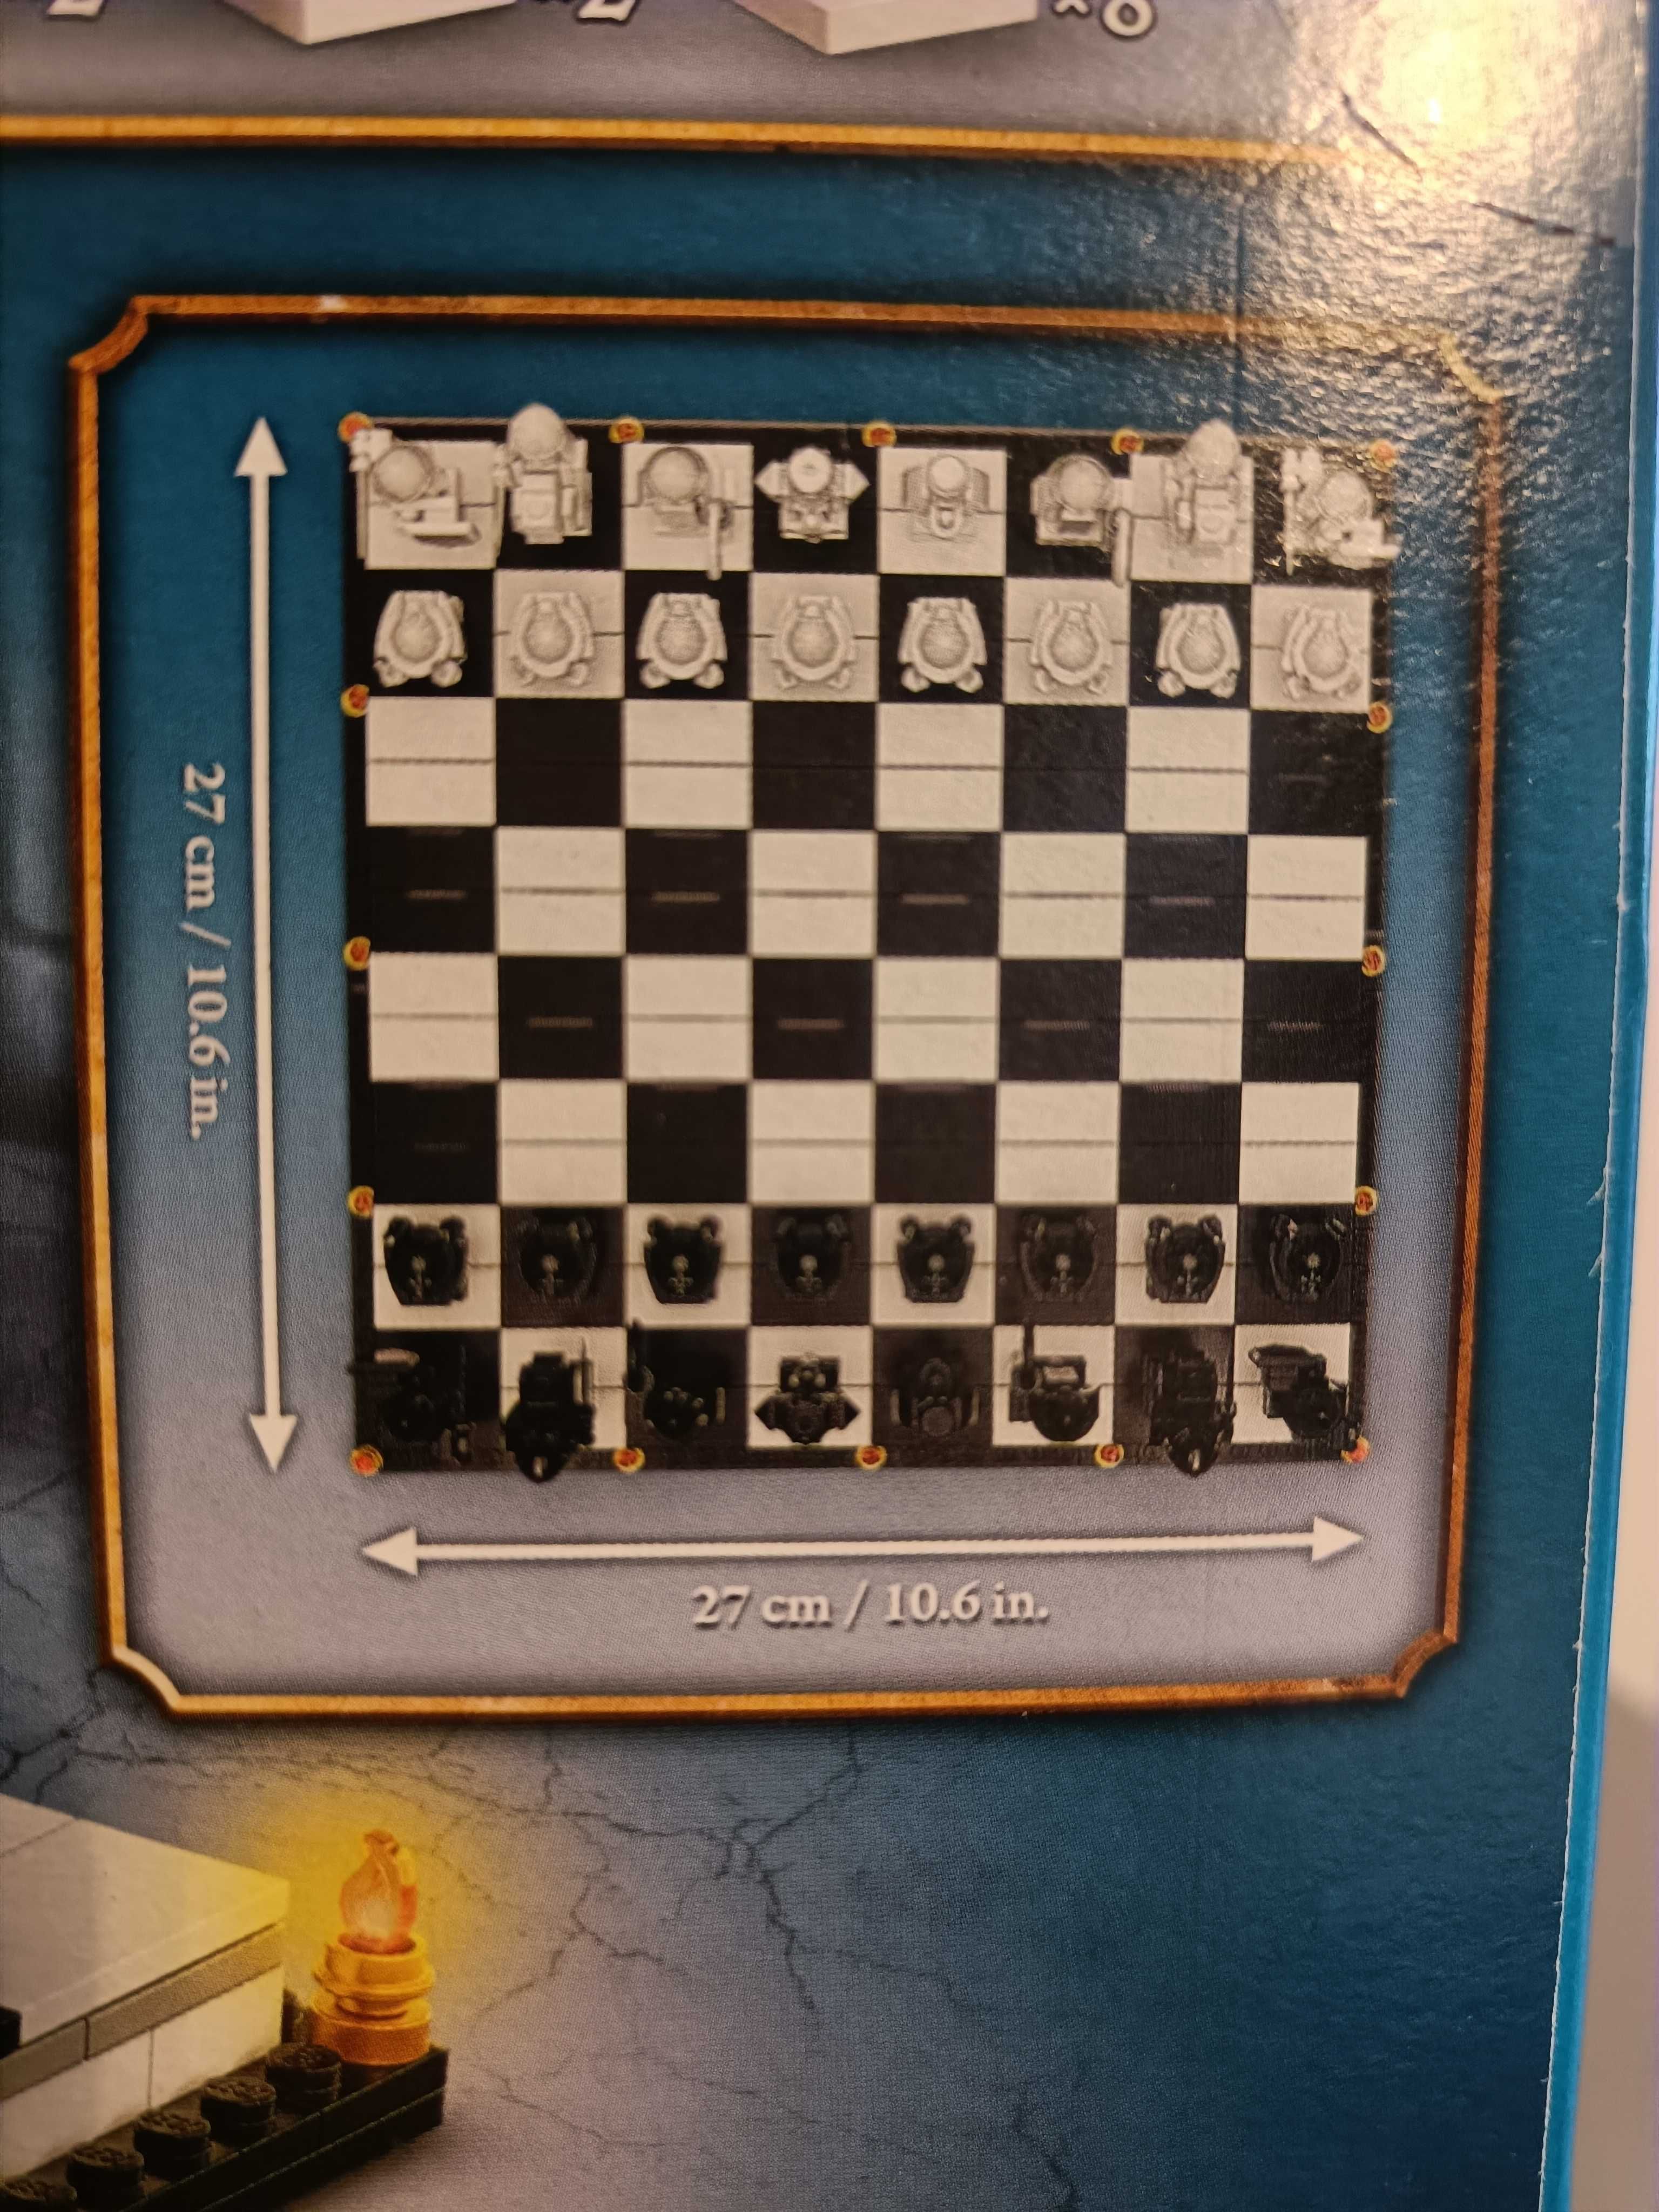 LEGO 76392 Harry Potter - Hogwarts Wizard's Chess